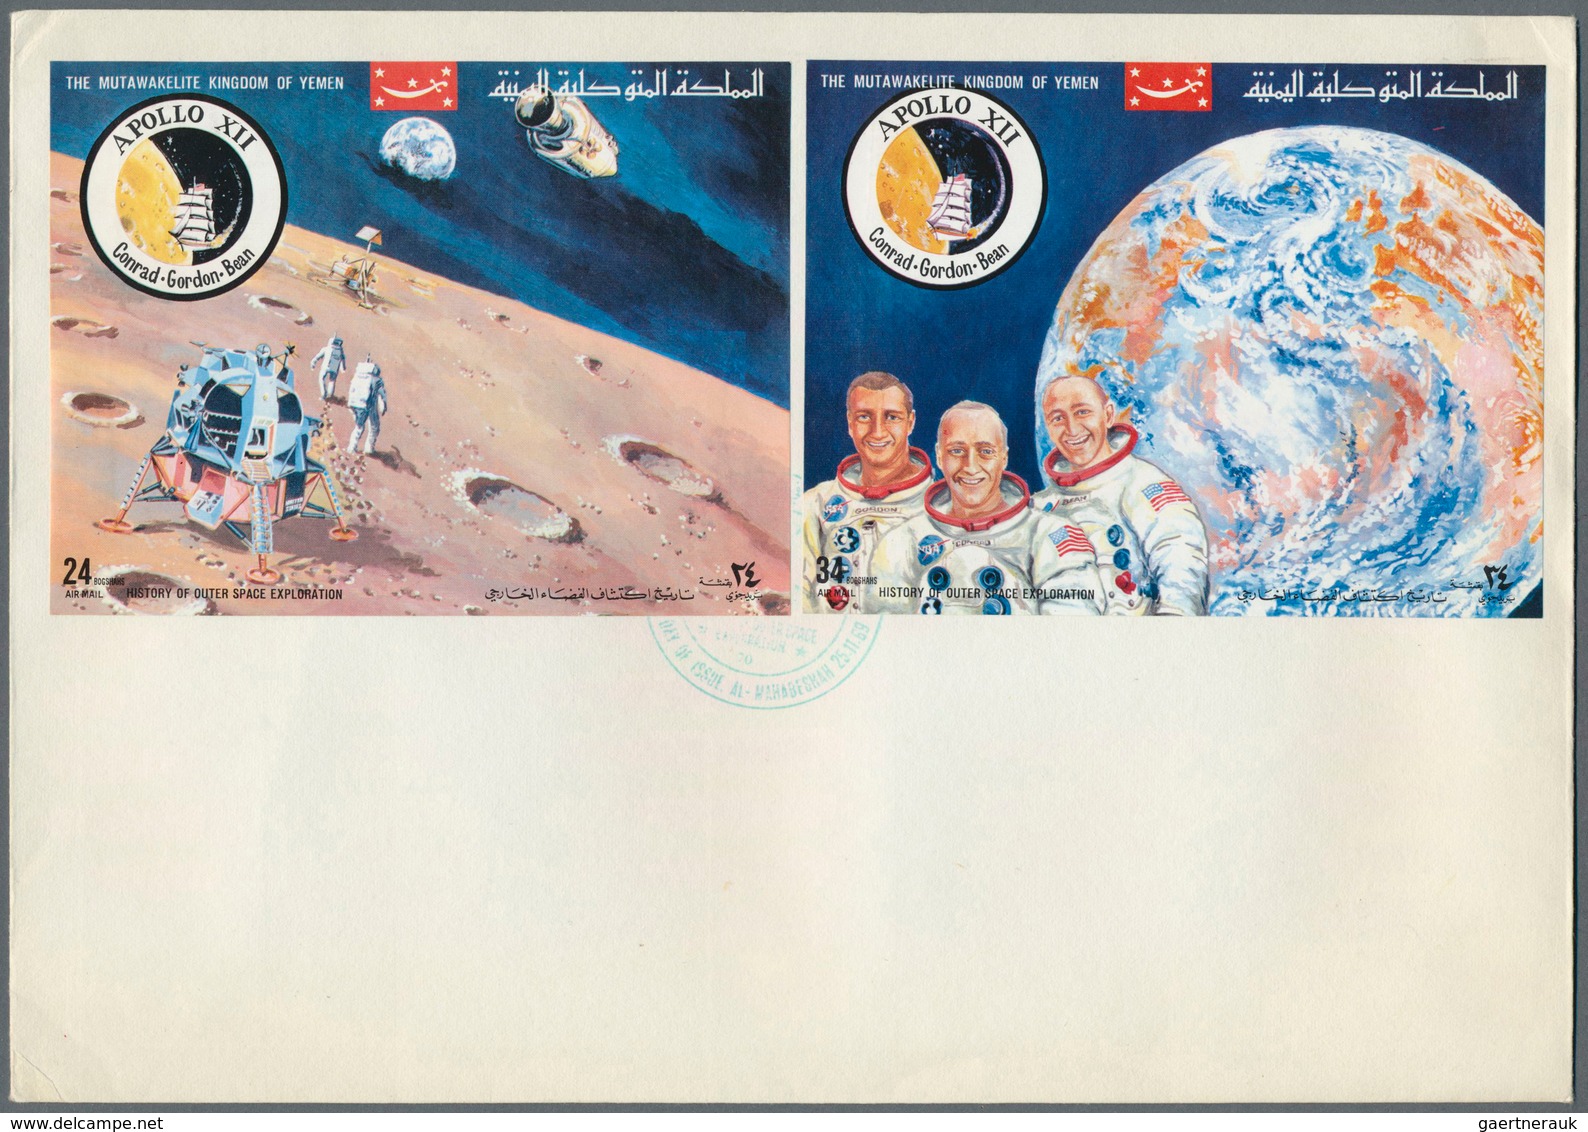 25467 Thematik: Raumfahrt / astronautics: 1969/1972, Yemen (YAR/Kingdom), group of 33 envelopes bearing th